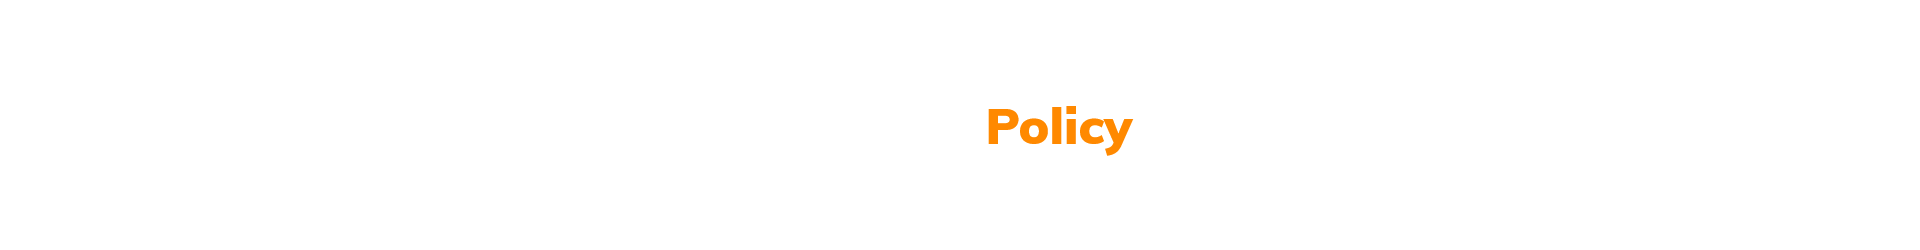 My-Digital-Privacy-Policy